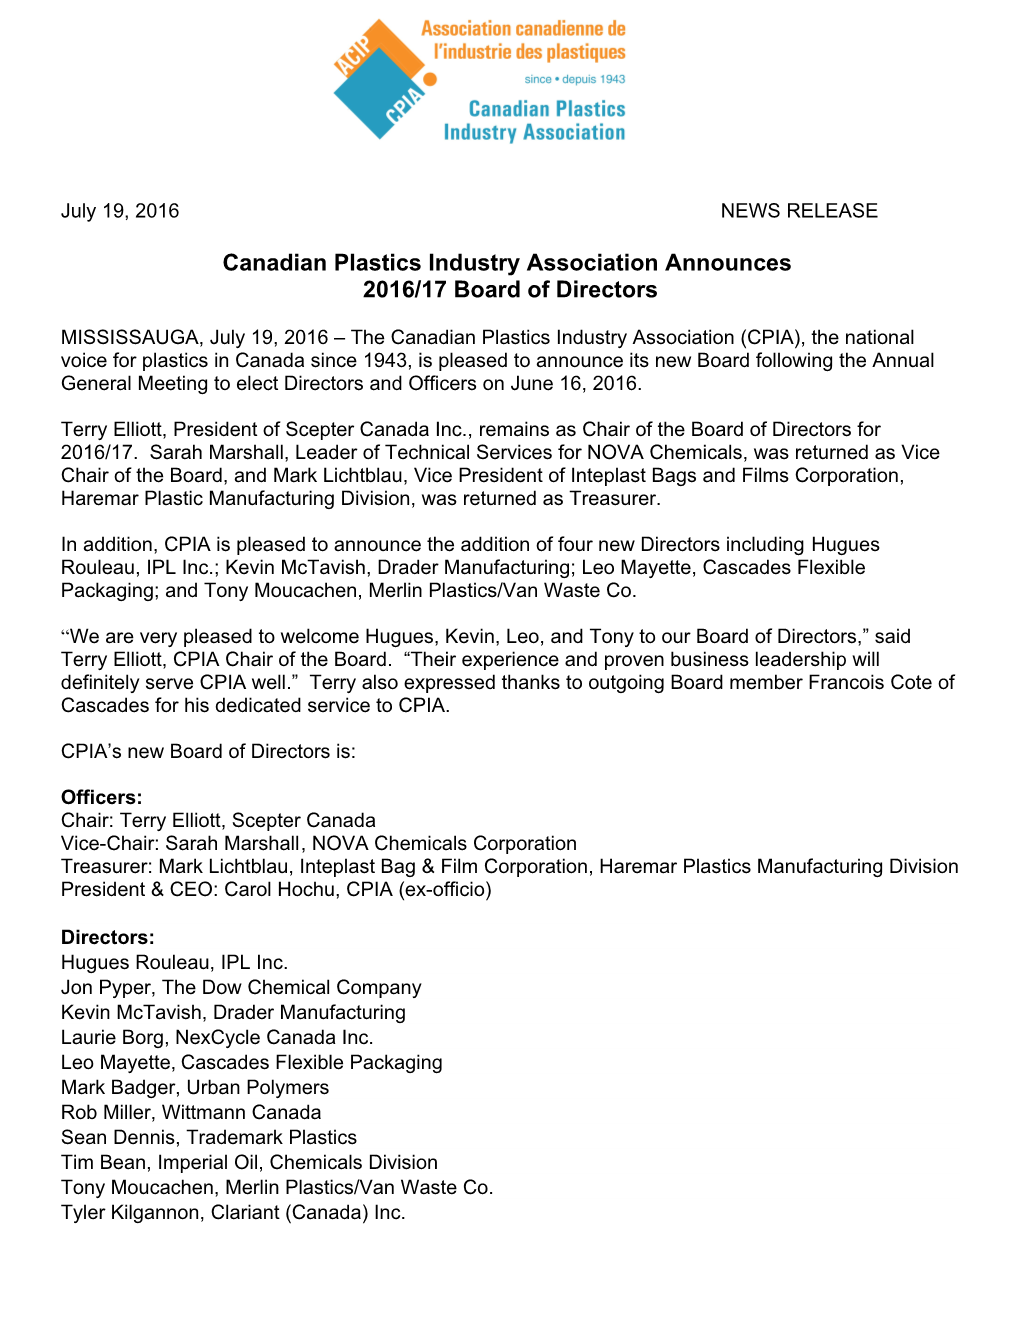 Canadian Plastics Industry Association Announces